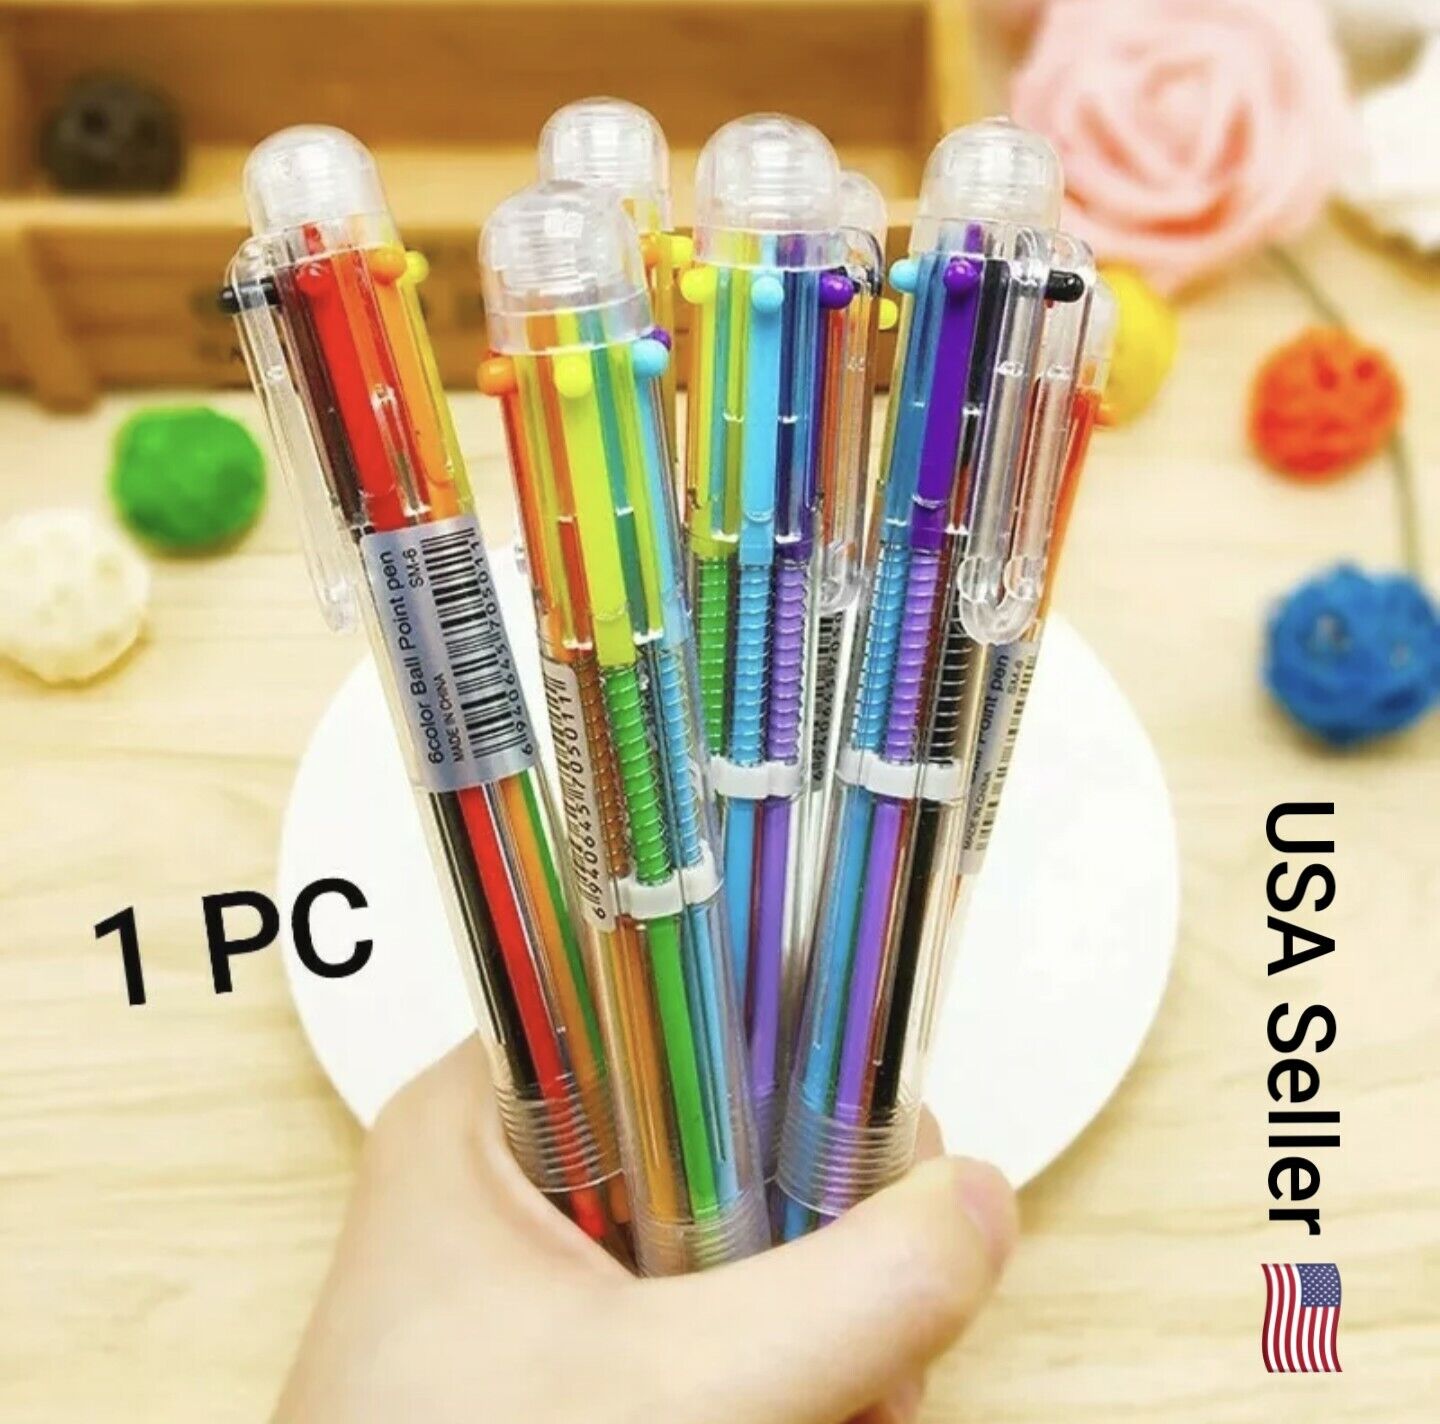 1 PC Ball Point Pen Marker Korea Creative Stationery Pen 6 Color In 1 Ballpoint